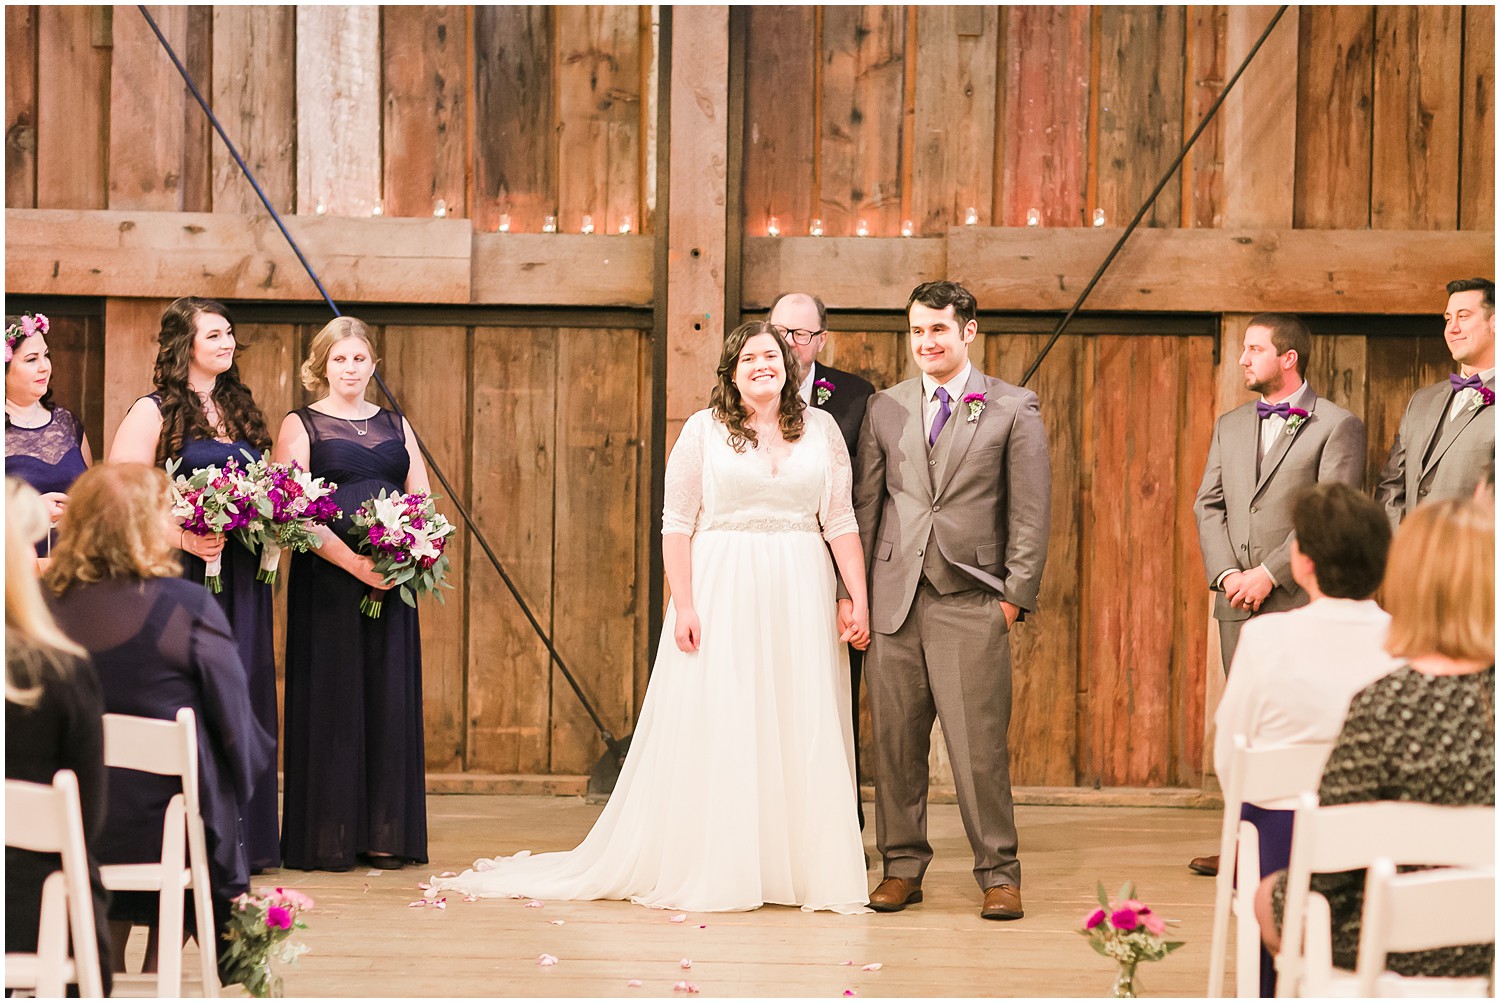 Pickering Barn Wedding | Bryan & Angela